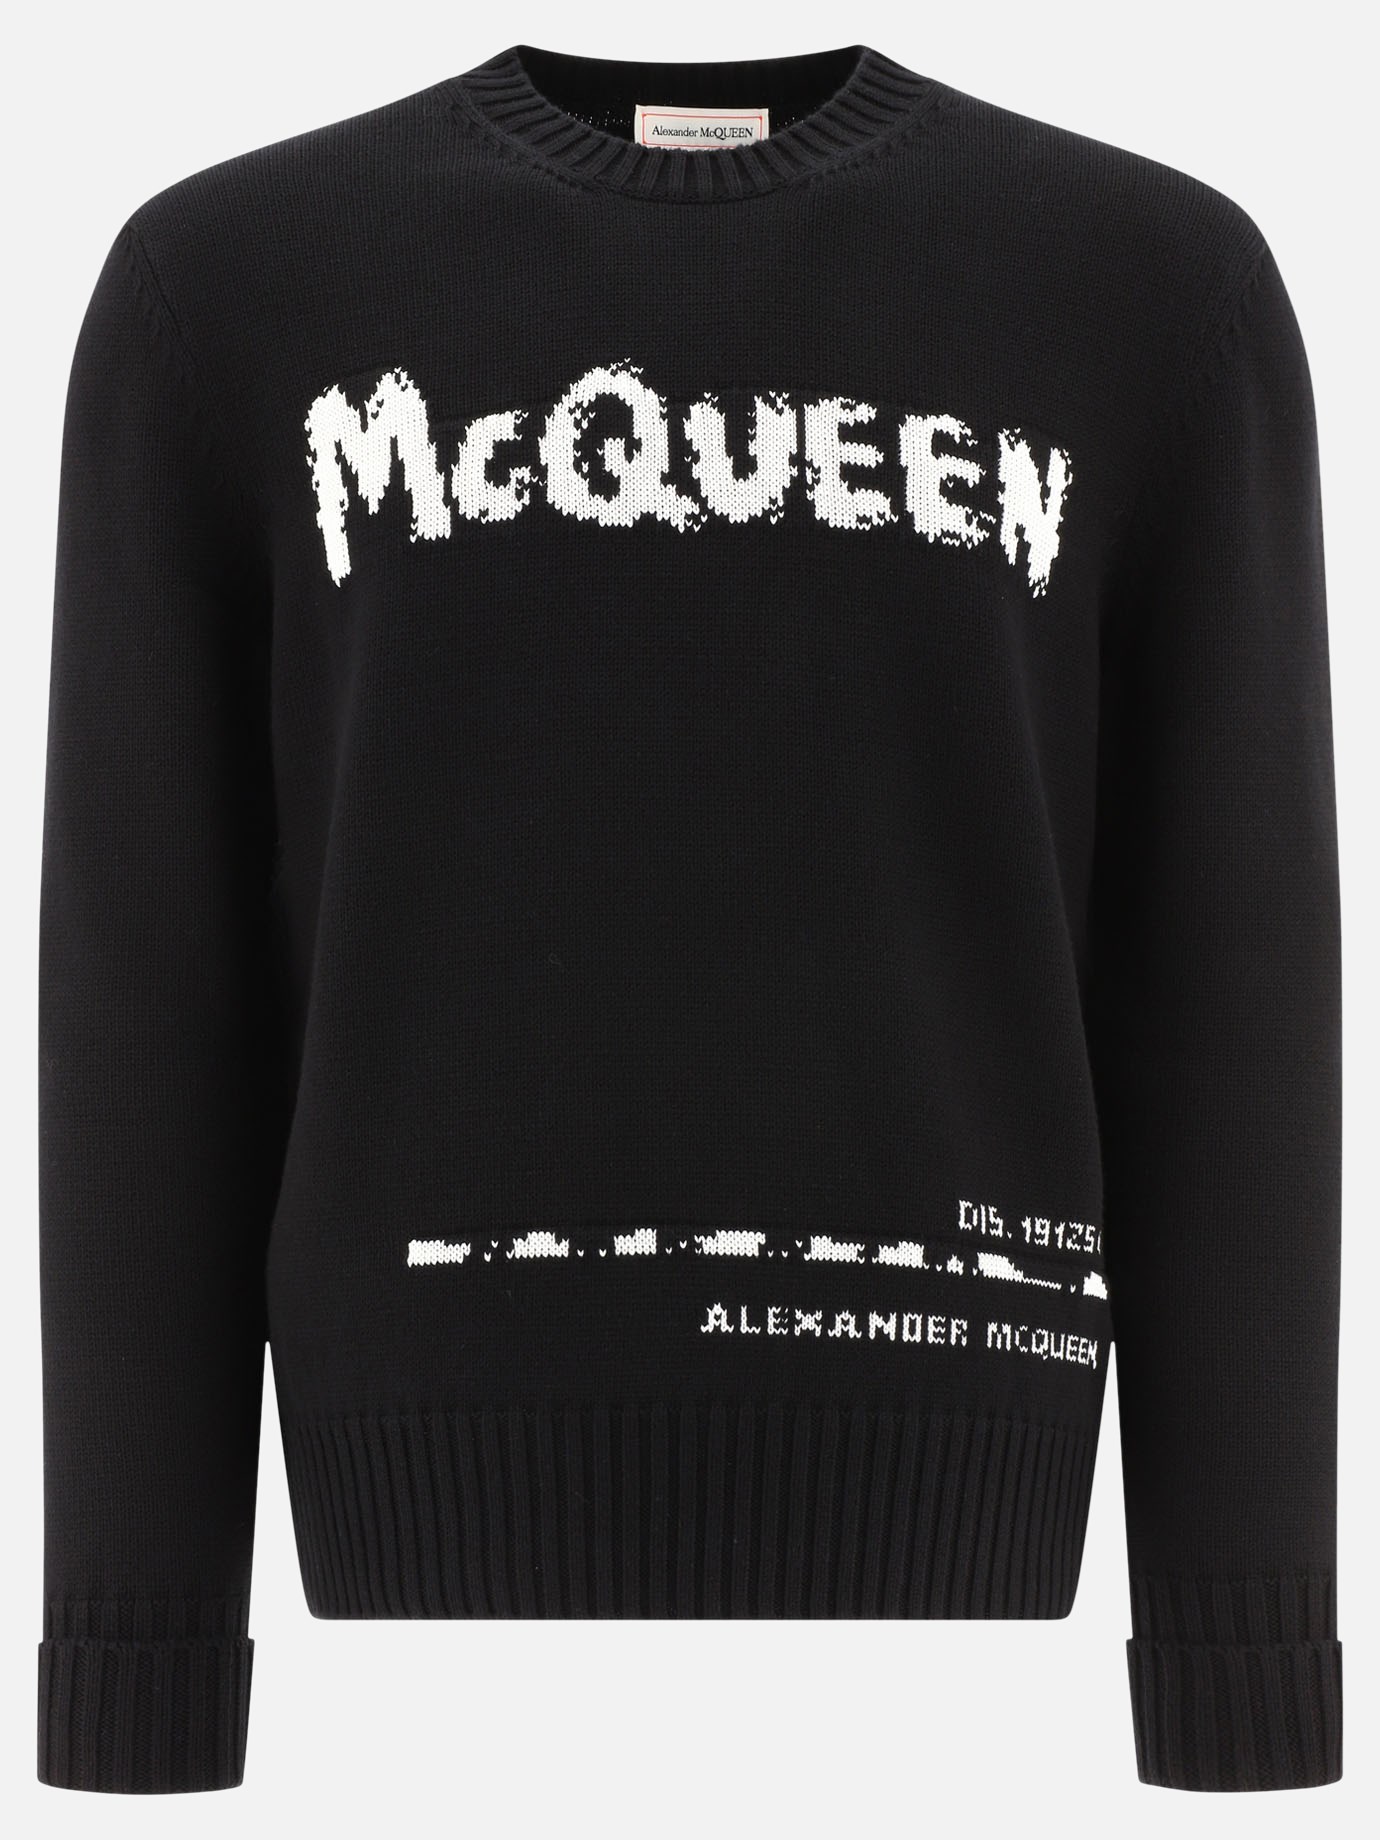  Graffiti  sweaterby Alexander McQueen - 2